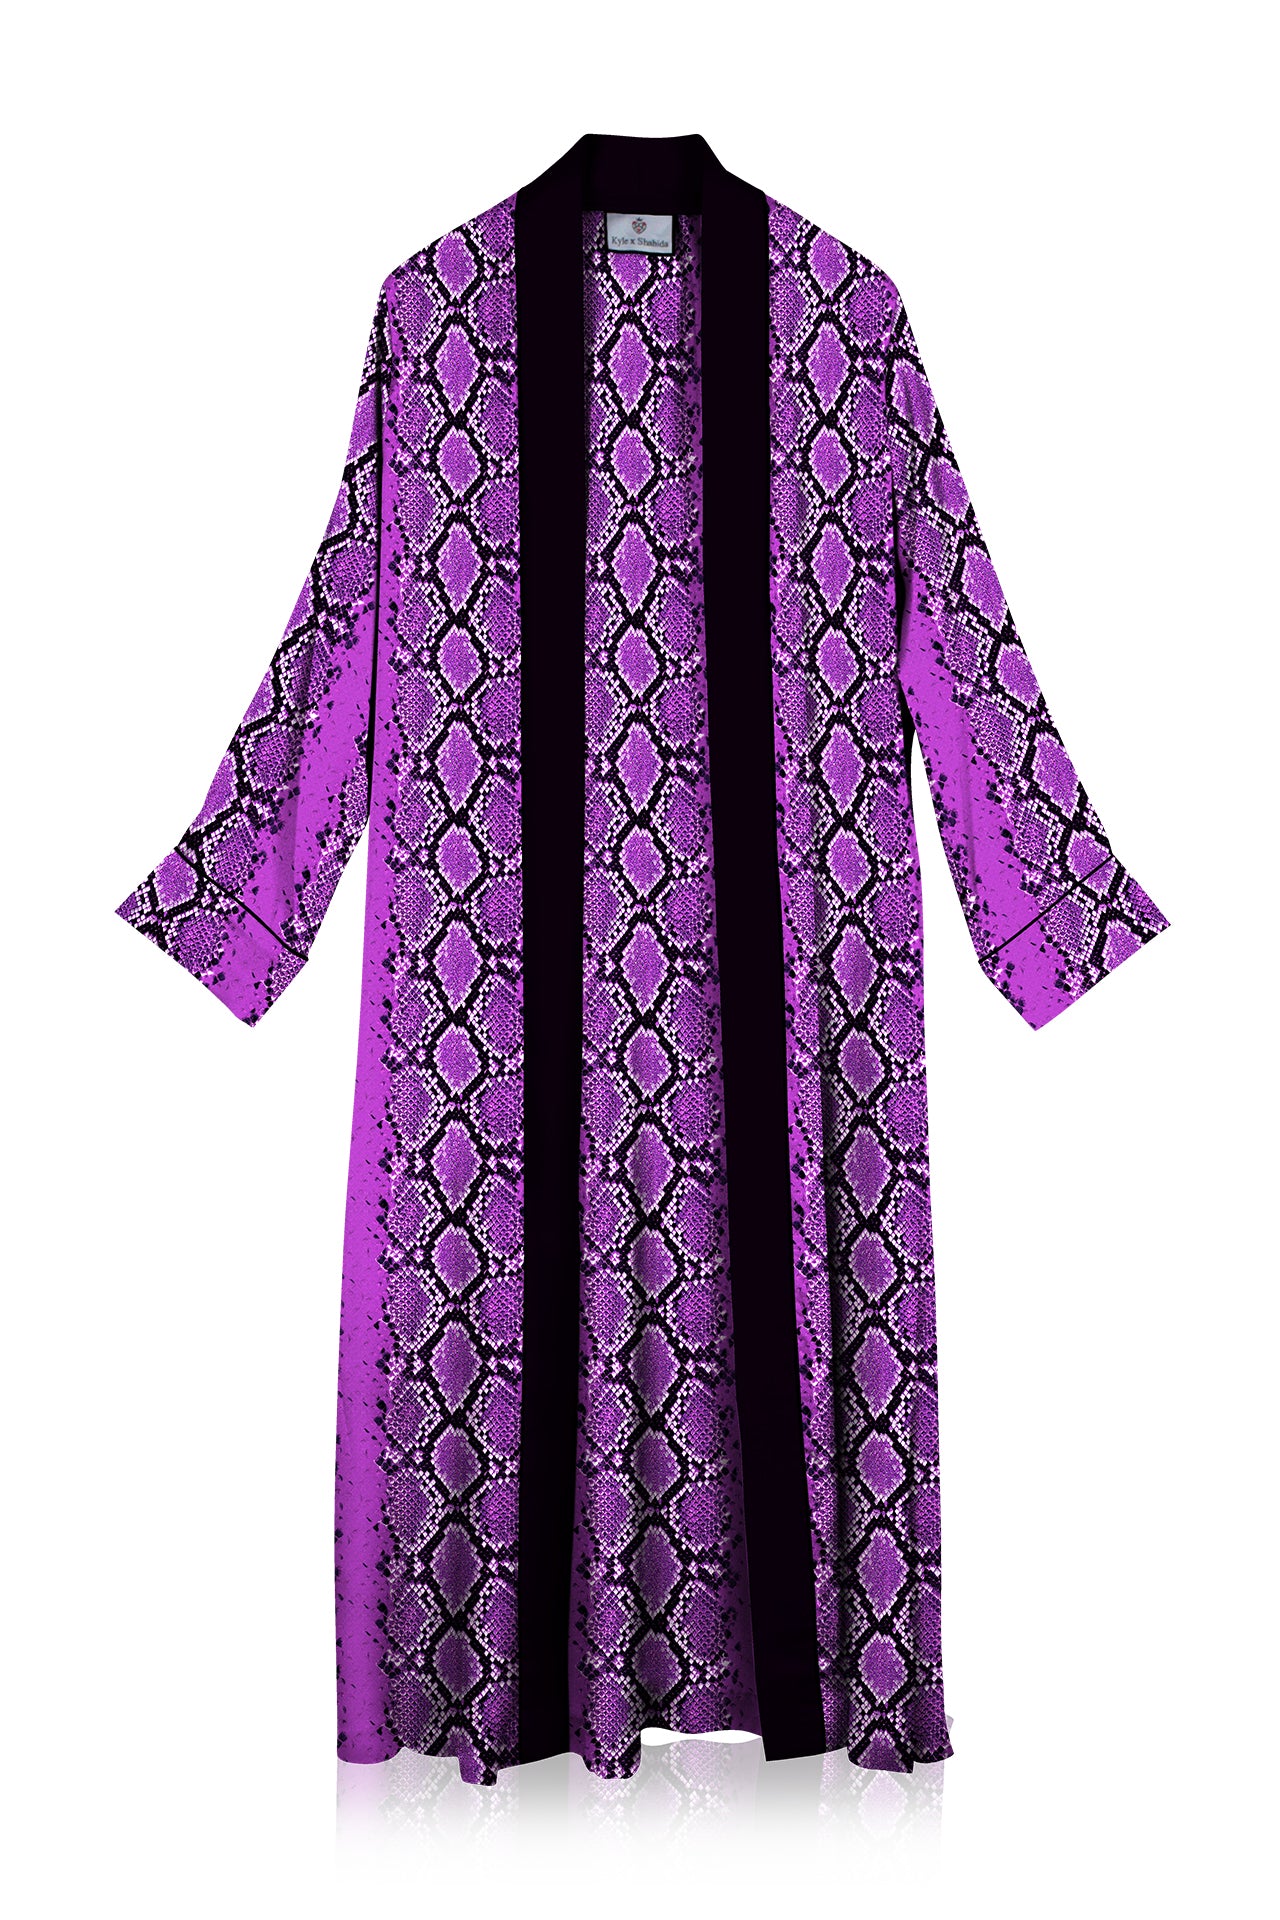 "purple silk kimono robe" "snake print robes" "kim ono silk robe" "Kyle X Shahida"